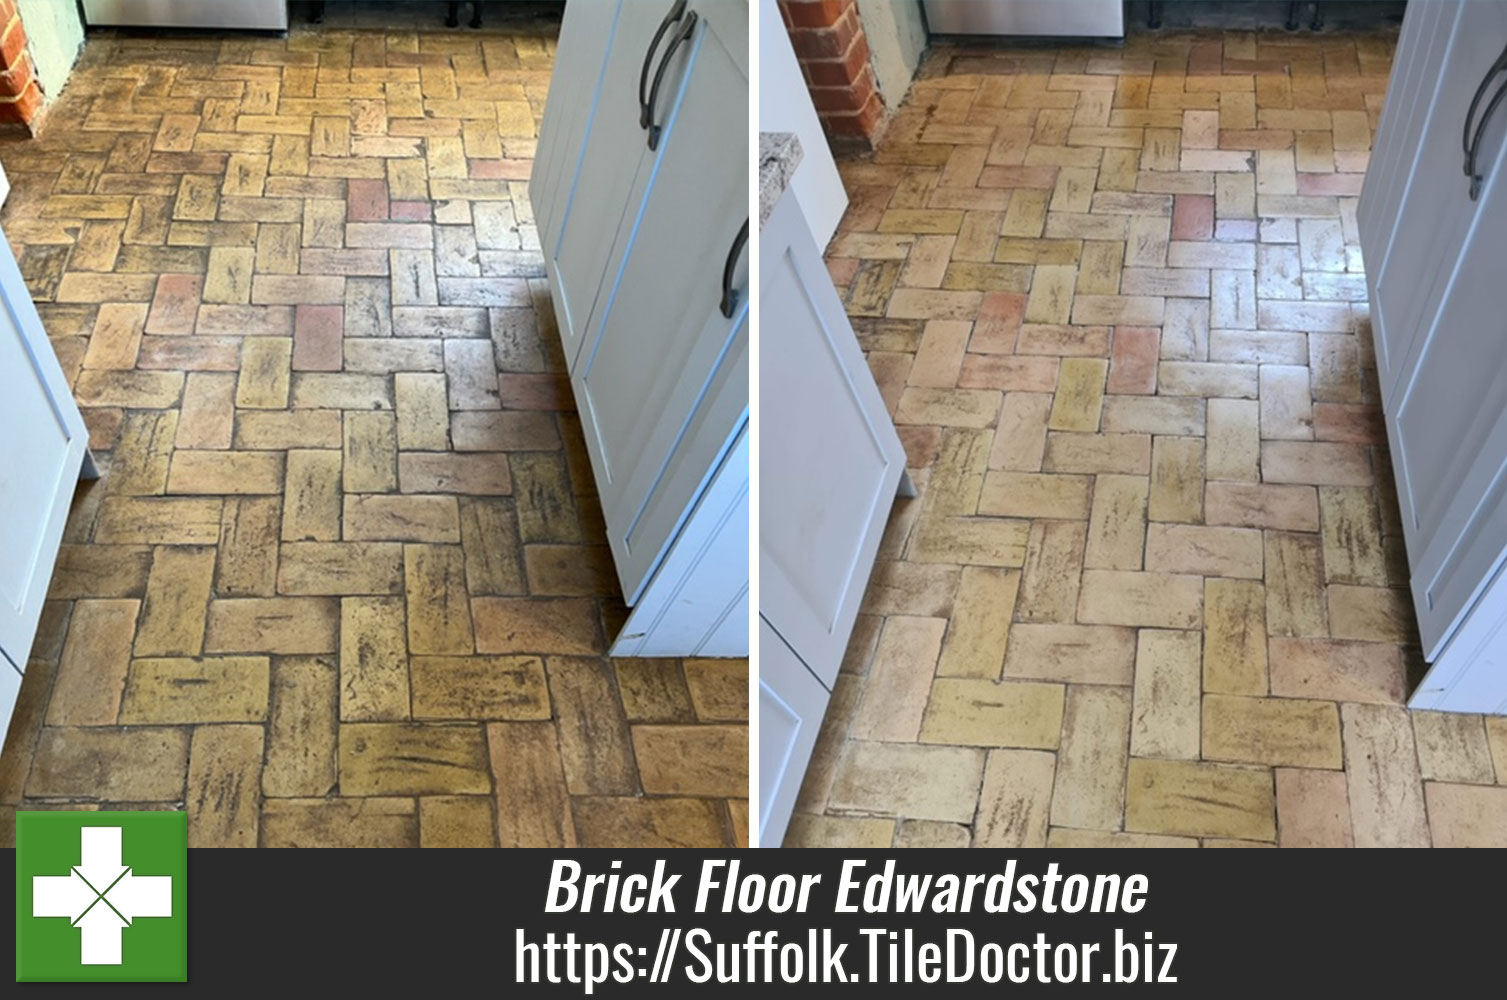 Brick-Tiled-Kitchen-Floor-Renovated-in-Edwardstone